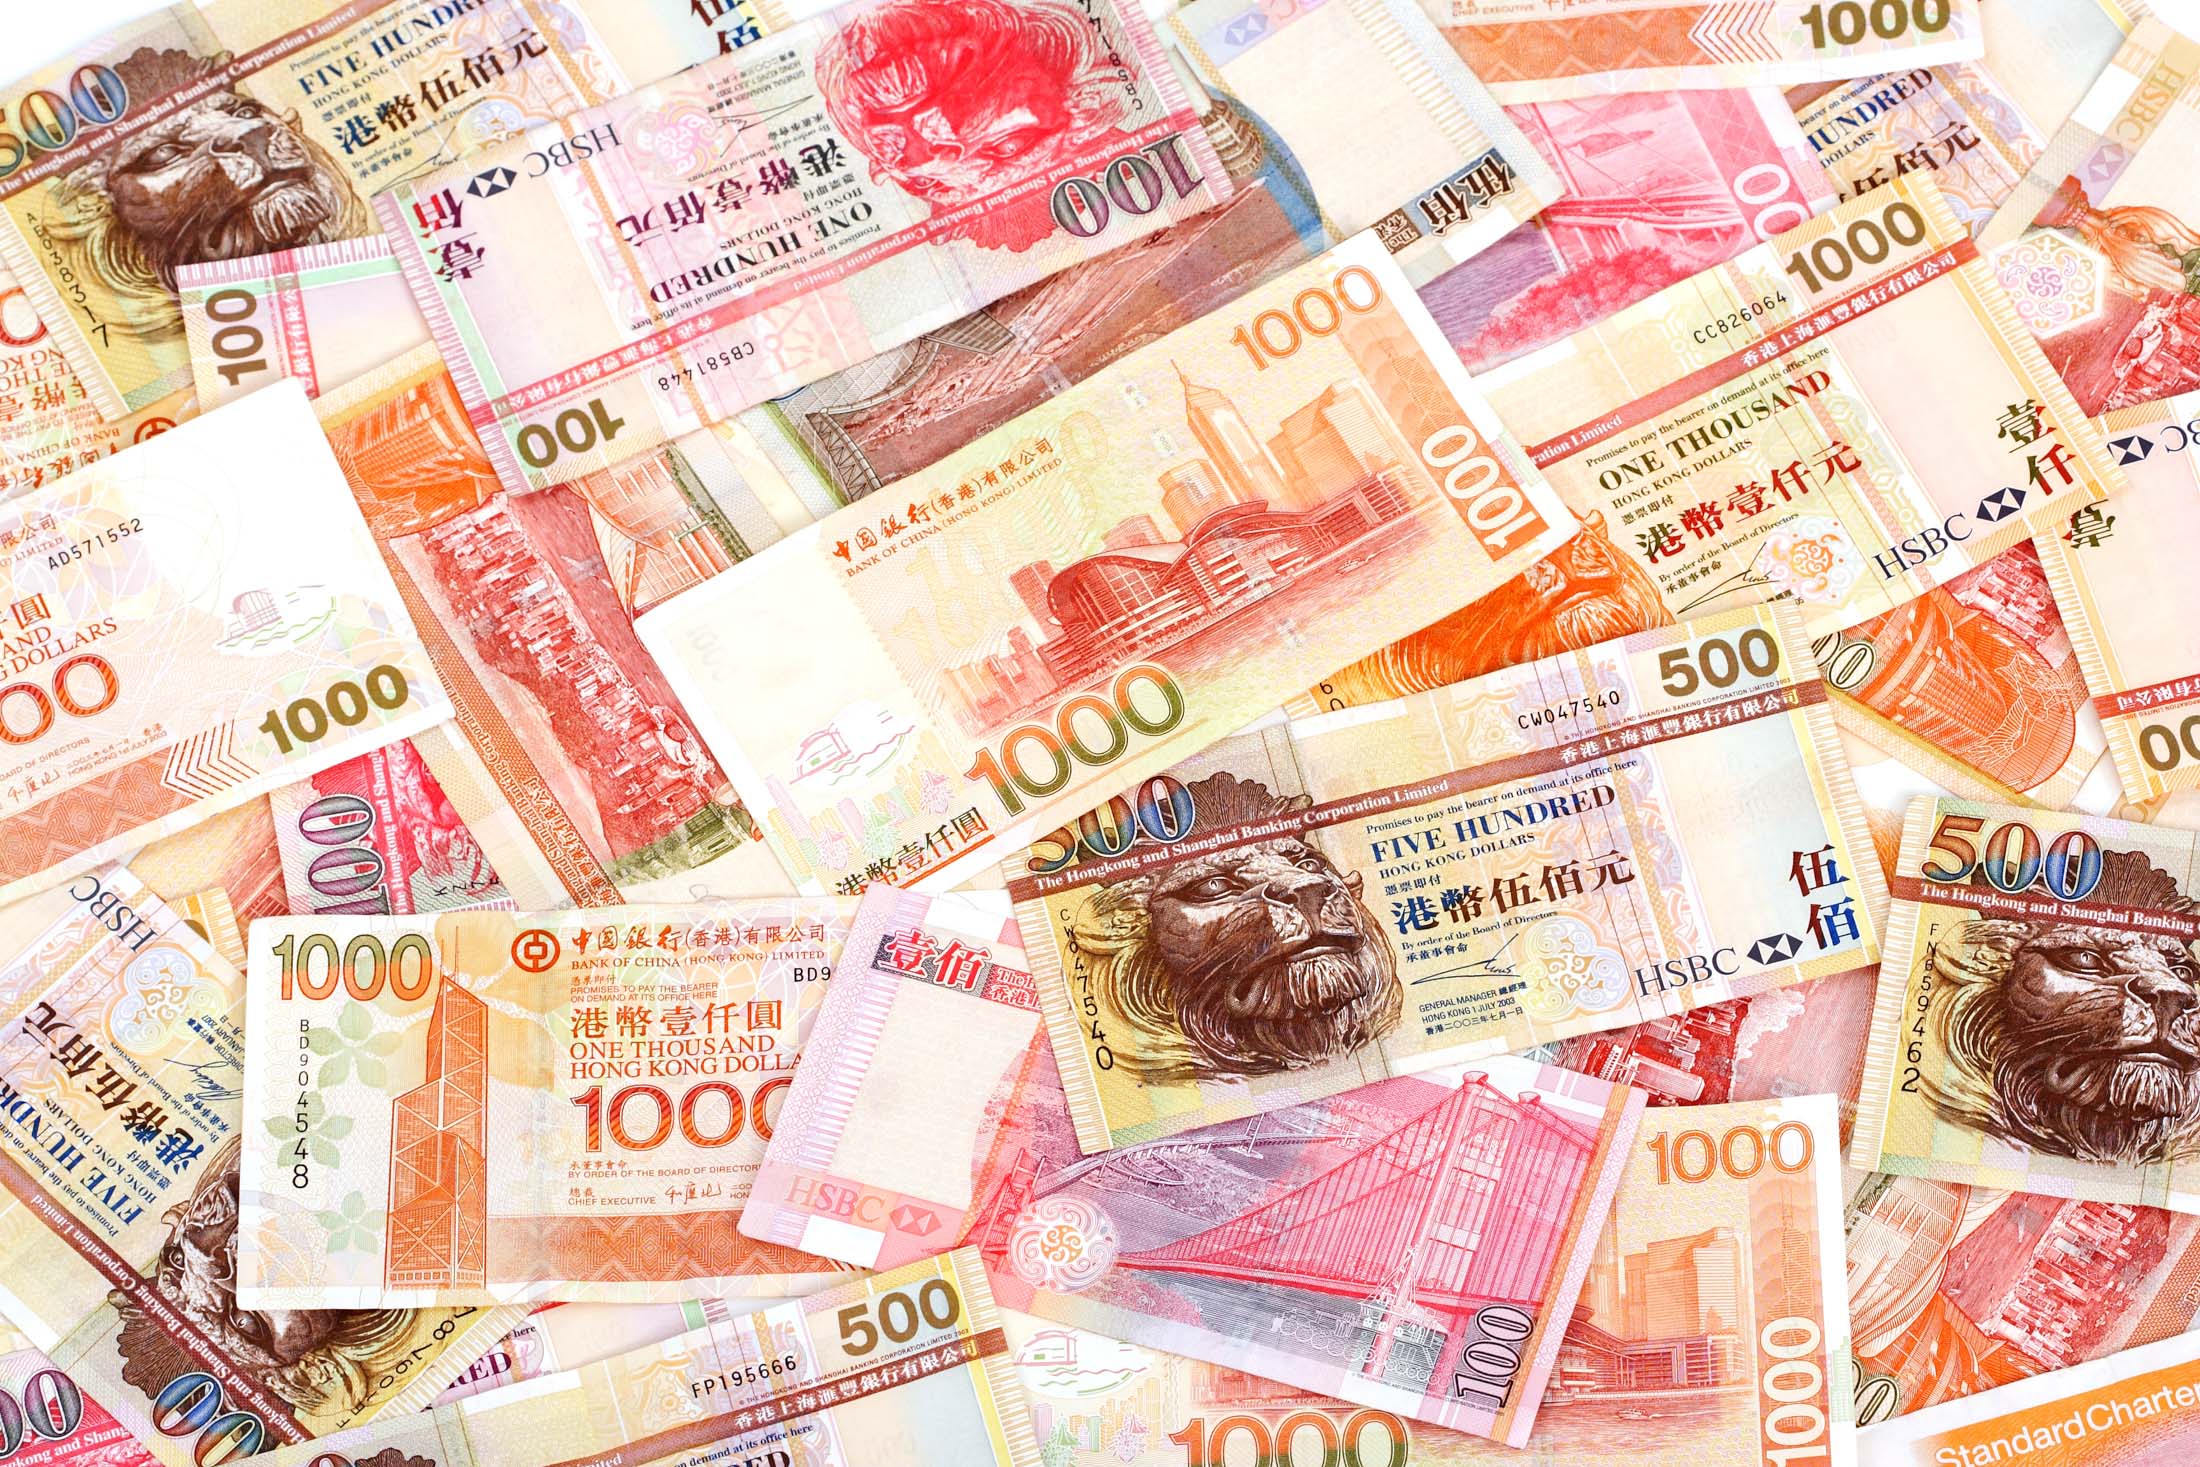 Hong Kong dollar crisis